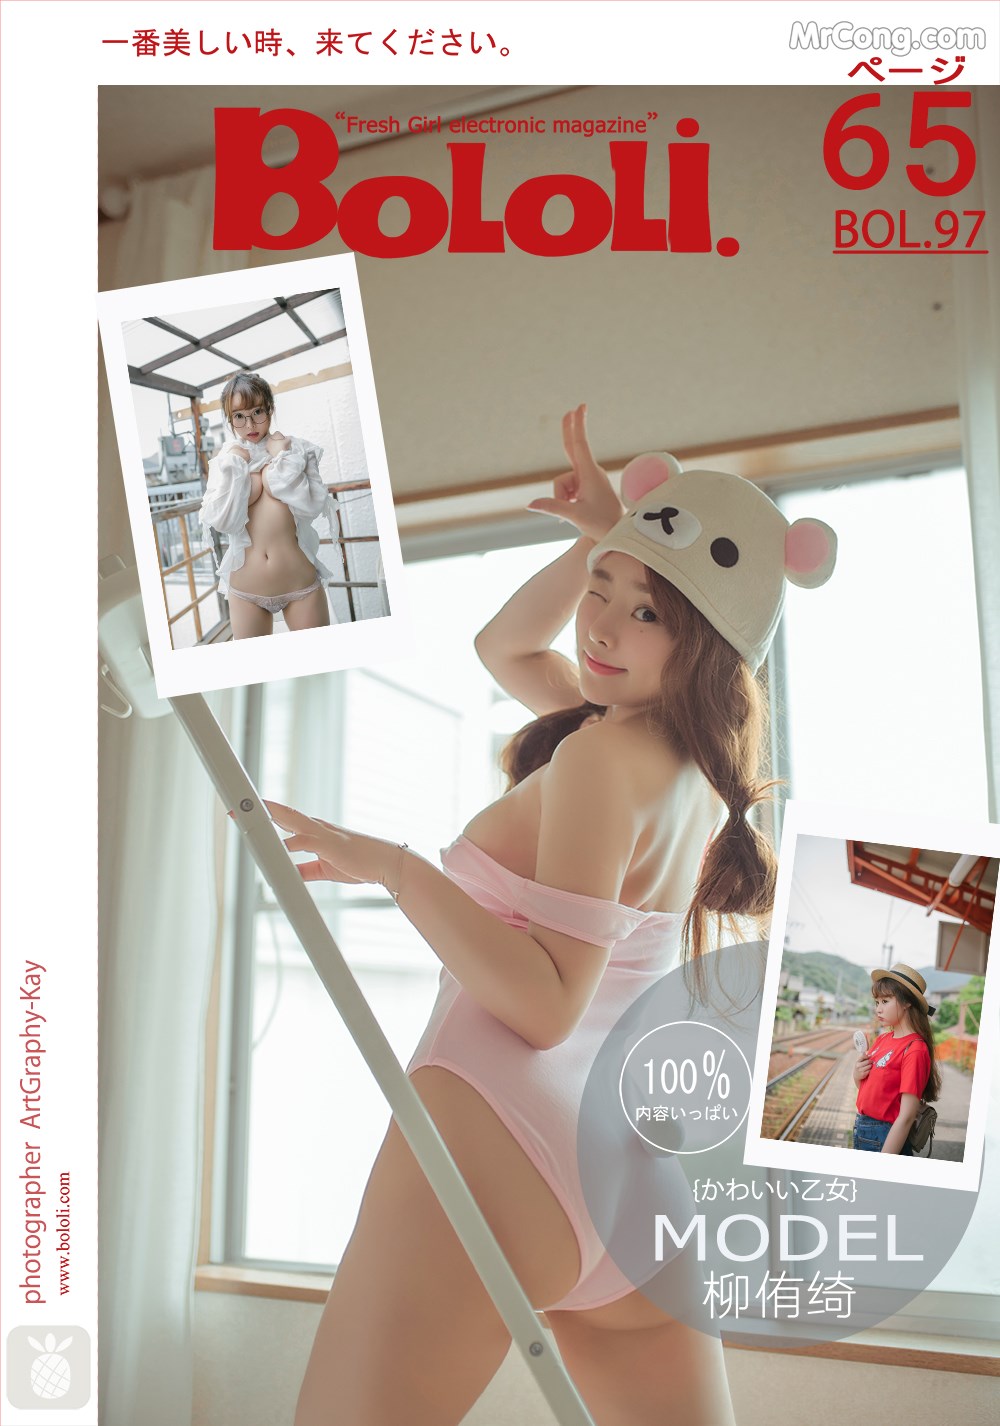 BoLoli 2017-08-06 Vol.097: Model Liu You Qi Sevenbaby (柳 侑 绮 Sevenbaby) (66 photos) photo 1-0